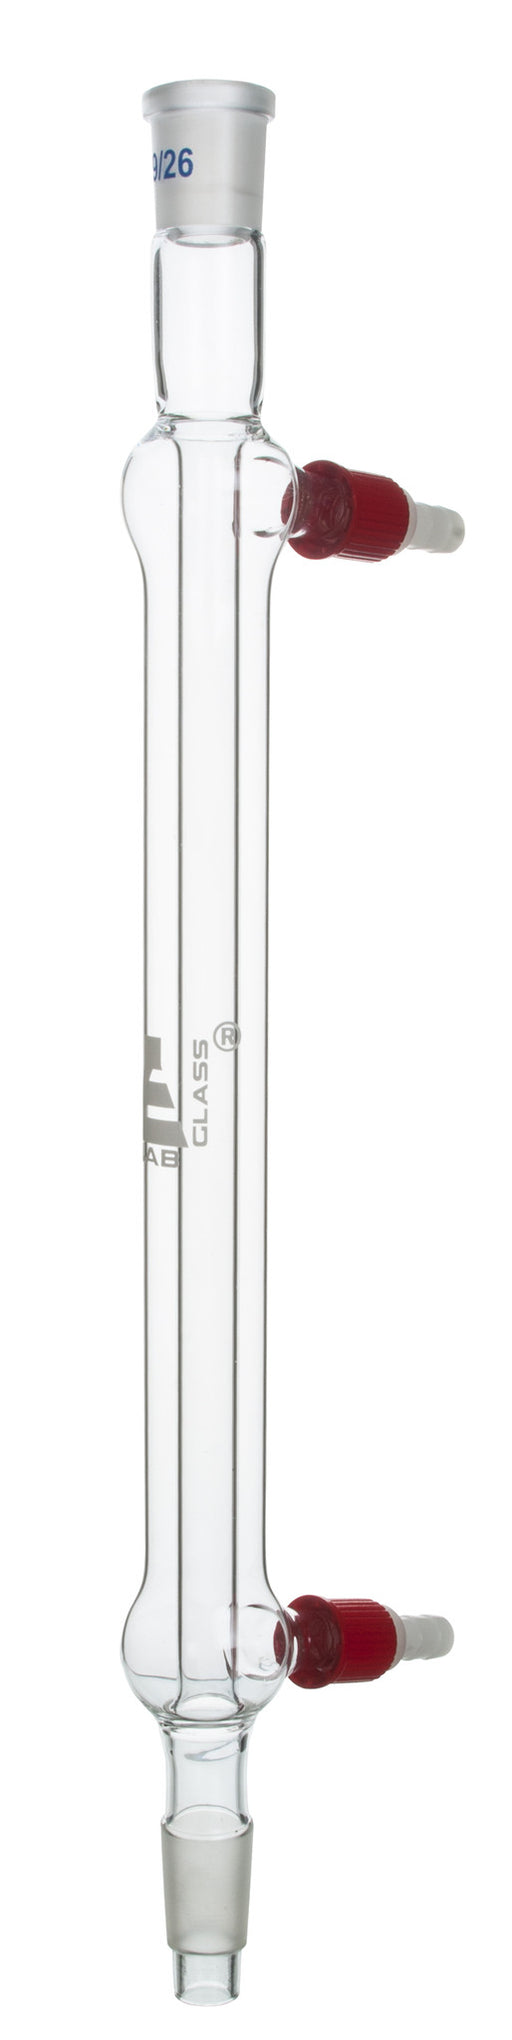 Condenser Liebig - Jointed, Plastic Connectors